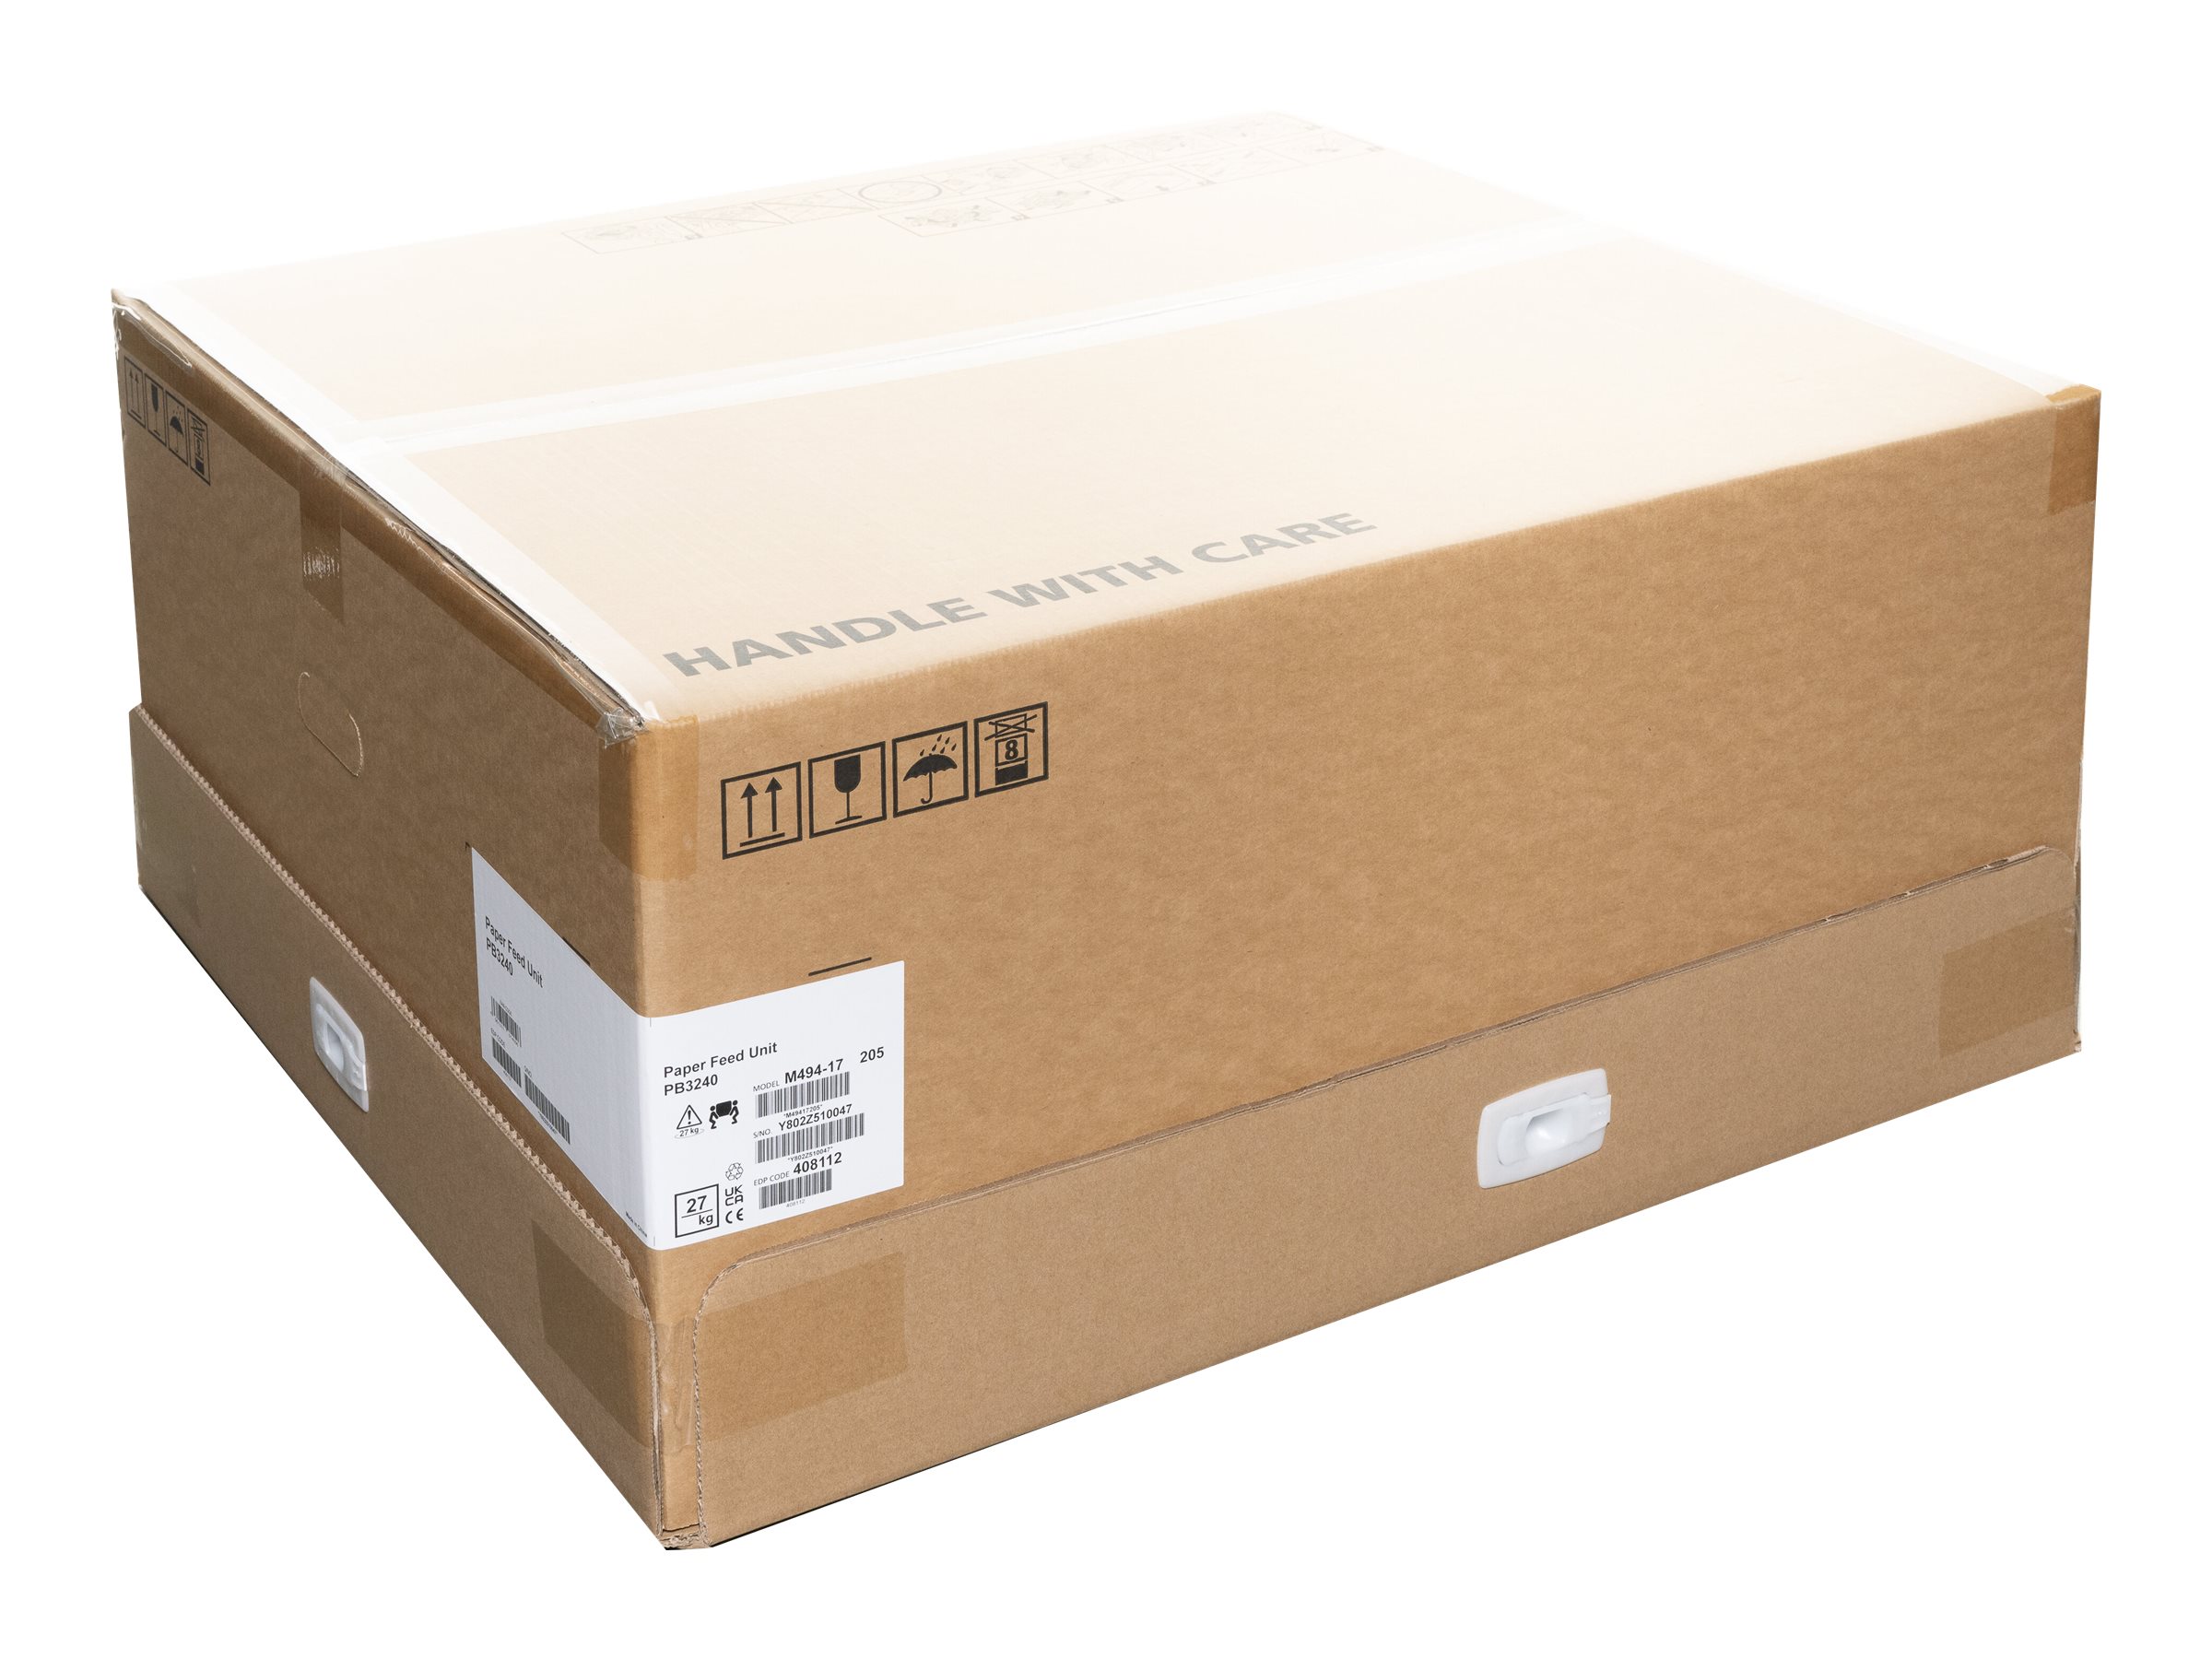 Ricoh Paper Feed Unit PB3240 - Medienfach / Zufhrung - 1100 Bltter in 2 Schubladen (Trays) - fr Ricoh MP C3004, MP C4504, MP 